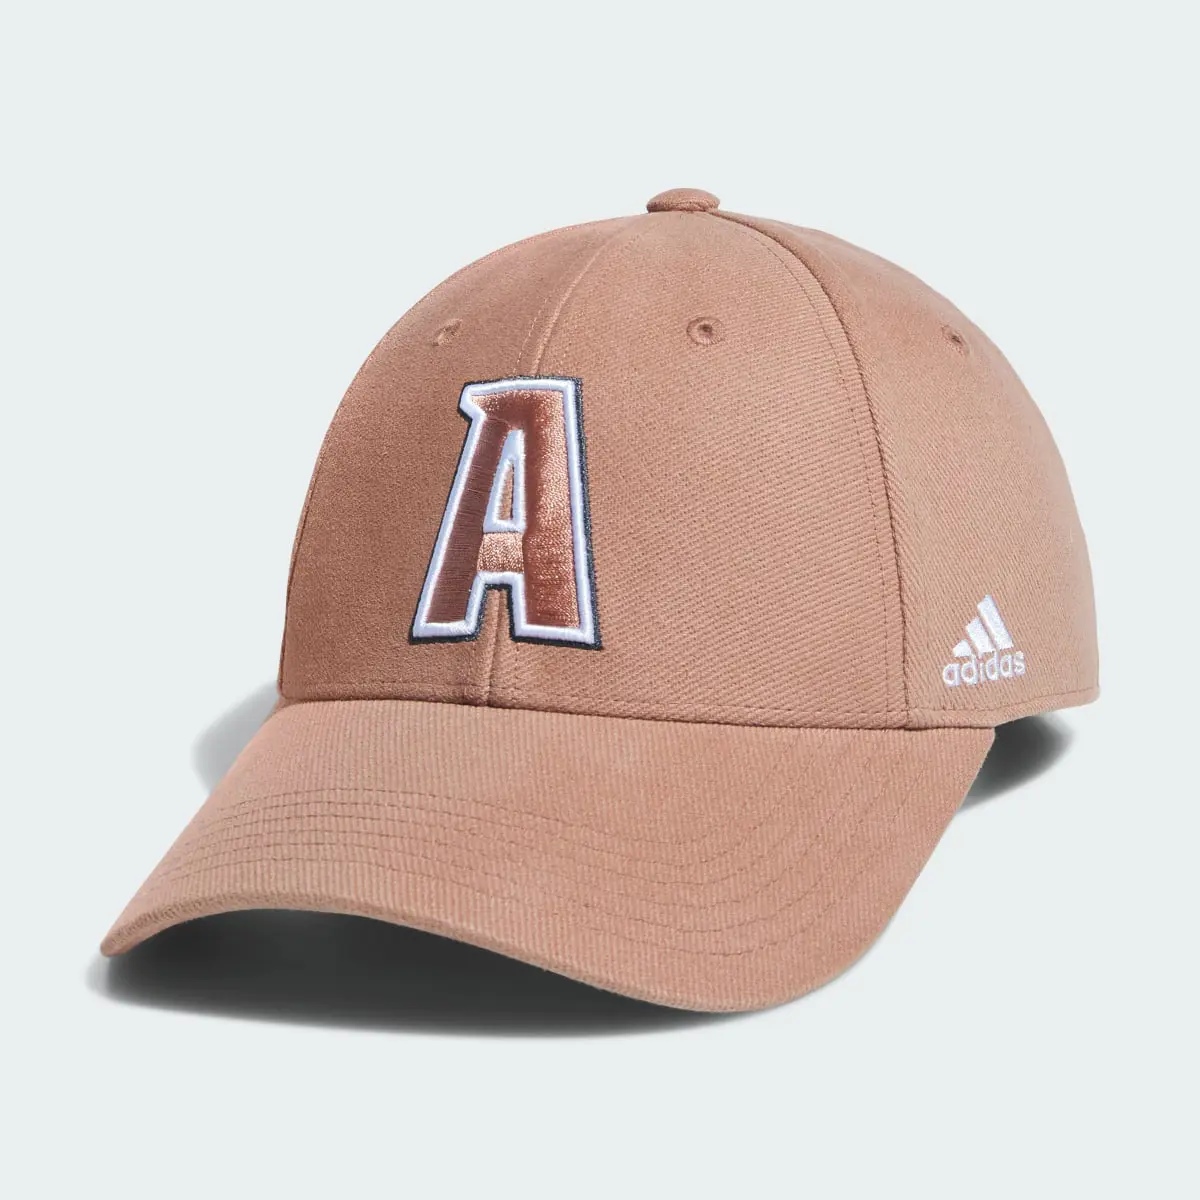 Adidas Structured Adjustable Hat. 2